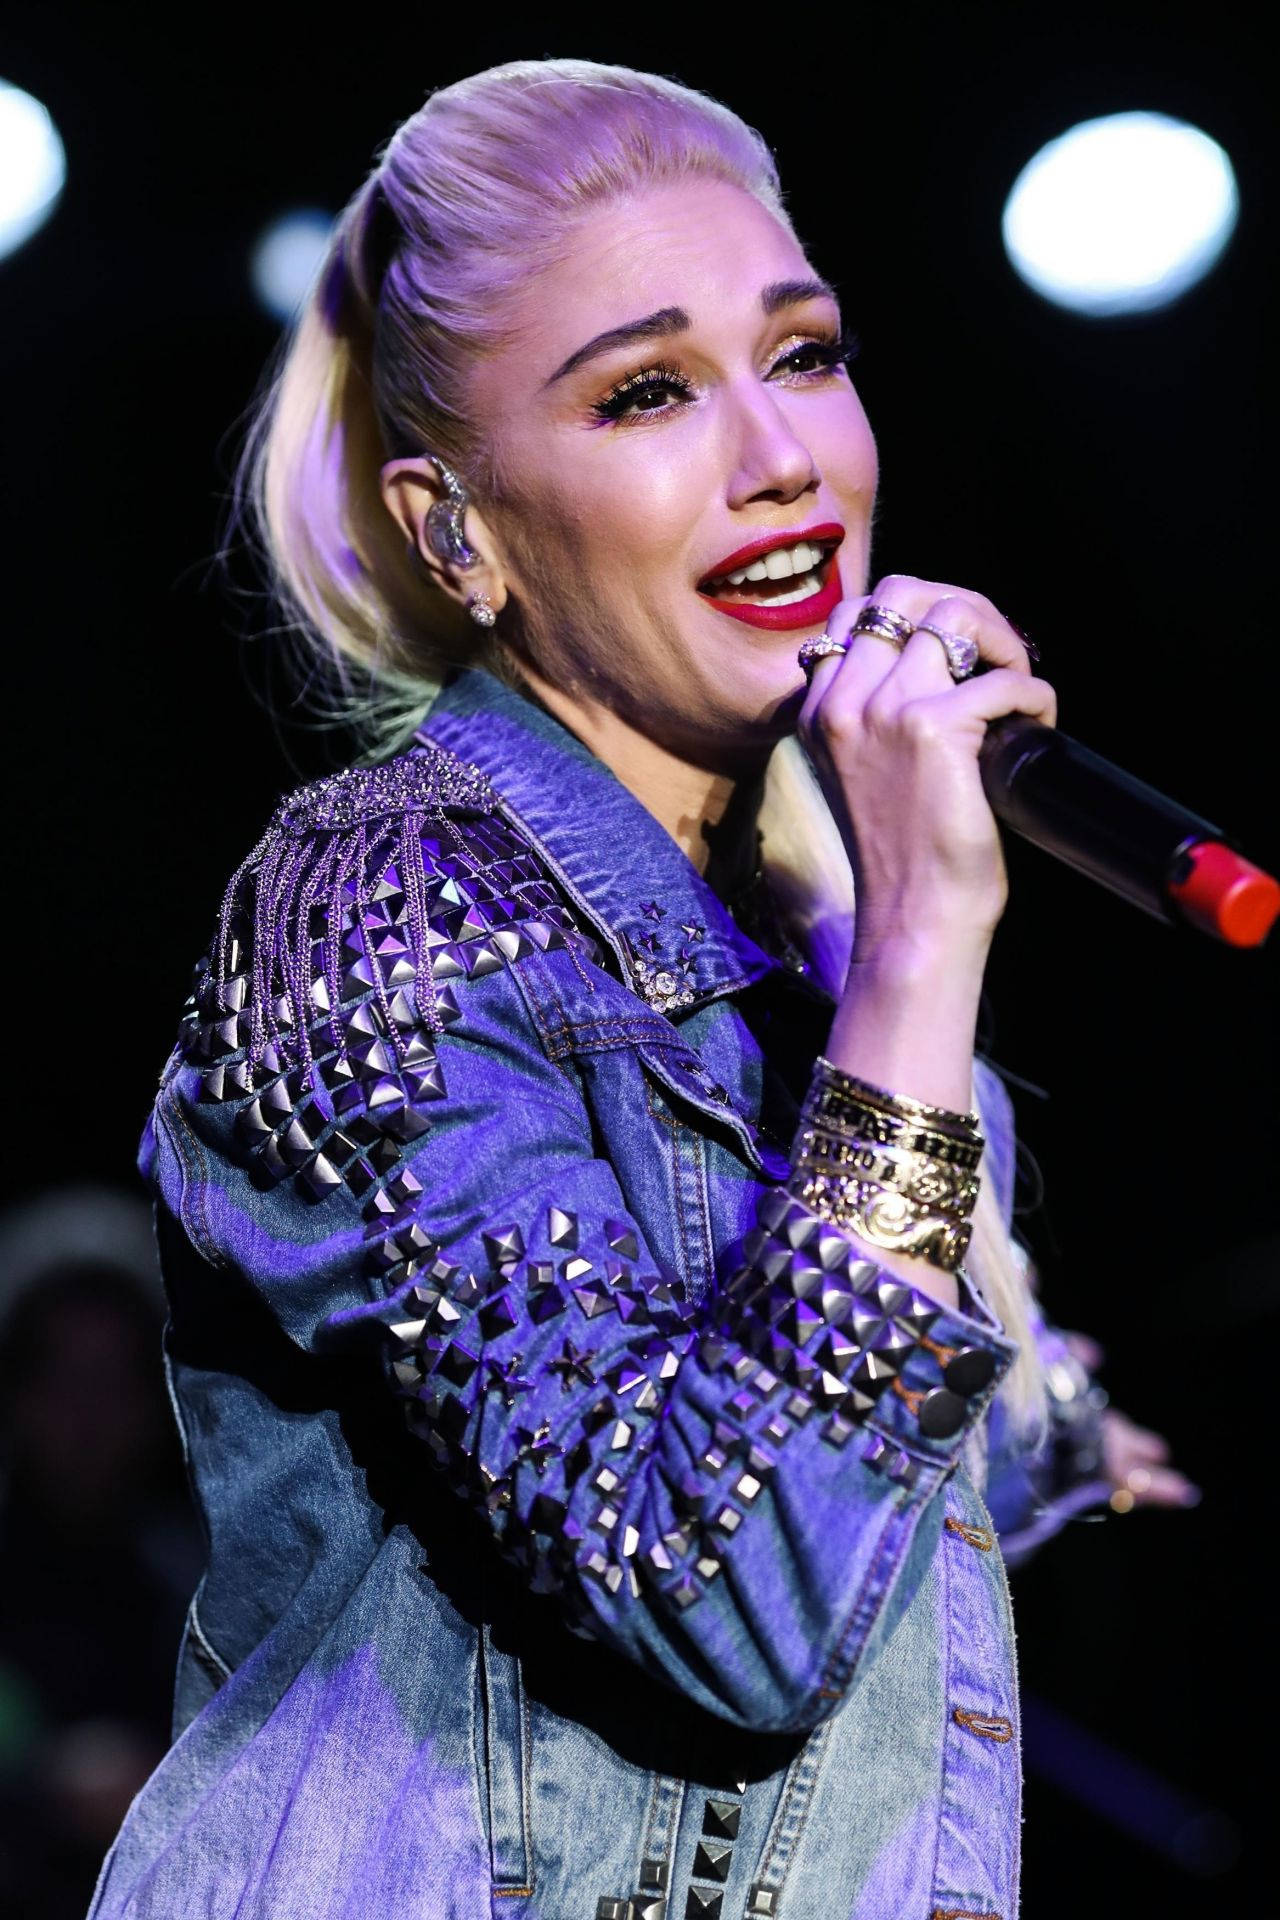 Gwen Stefani Singing On Stage Background